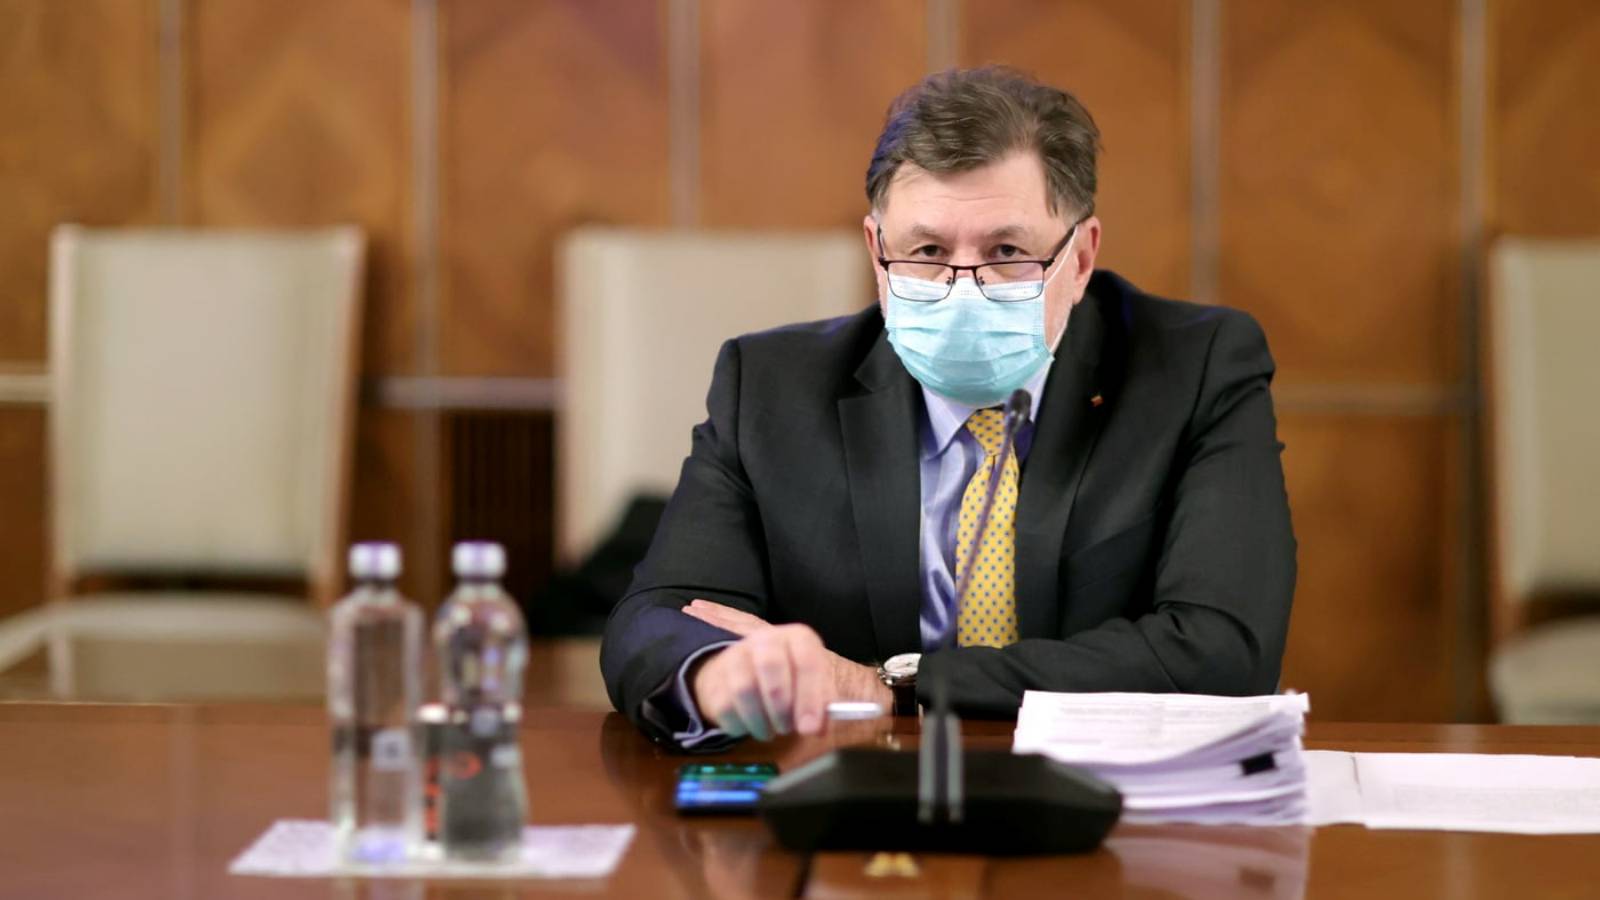 Alexandru Rafila draagt ​​maskerbescherming Maatregel goed gevoel